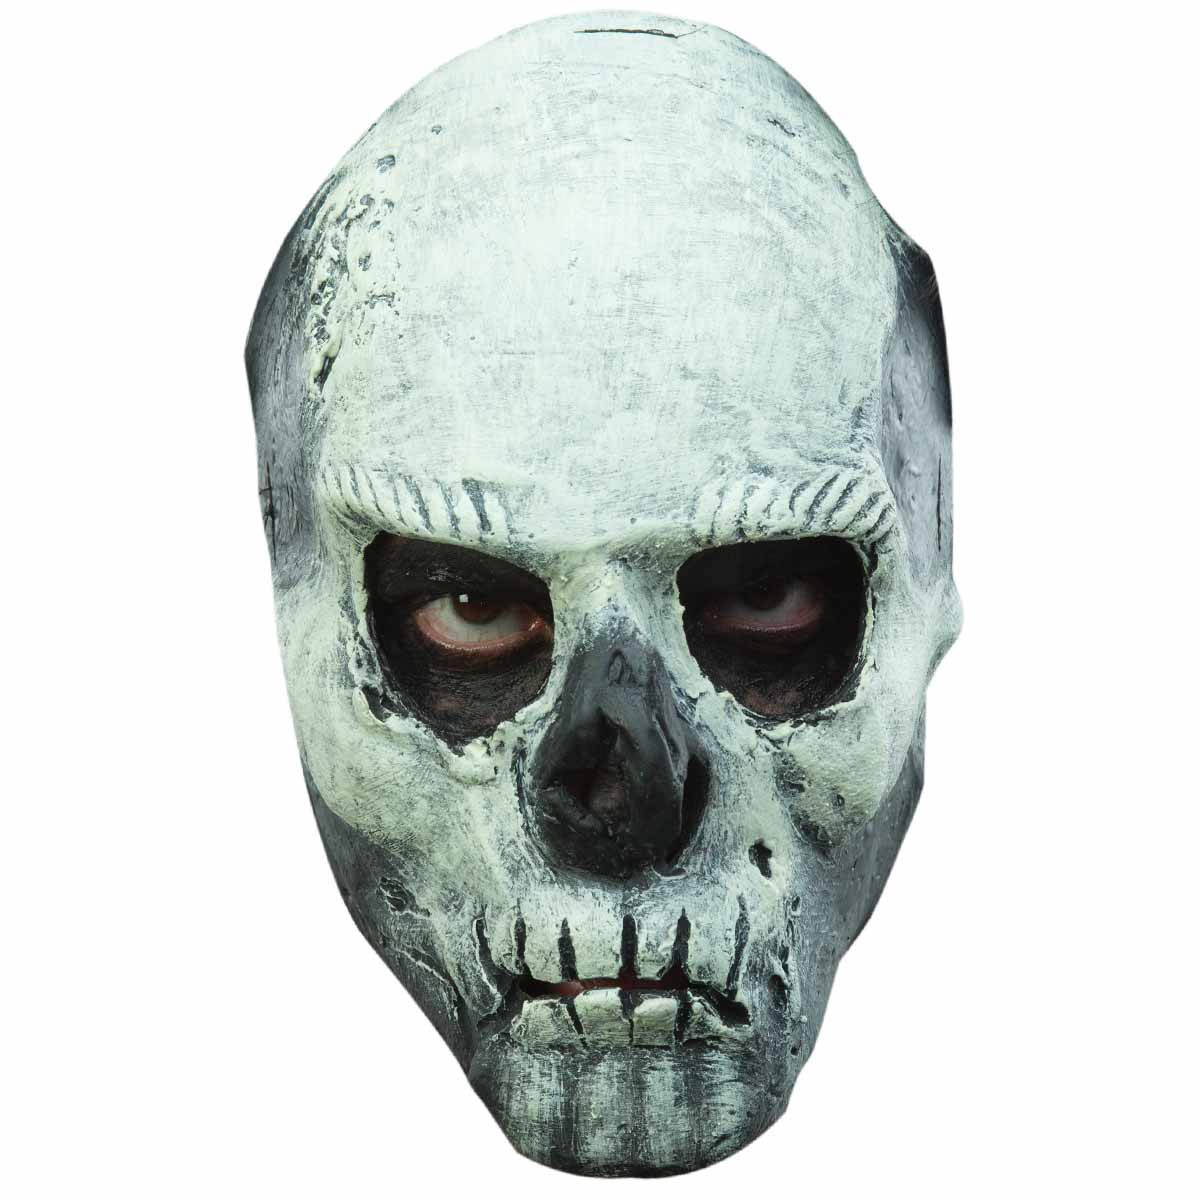 Mask, Ghoulish Glow In The Dark Skull